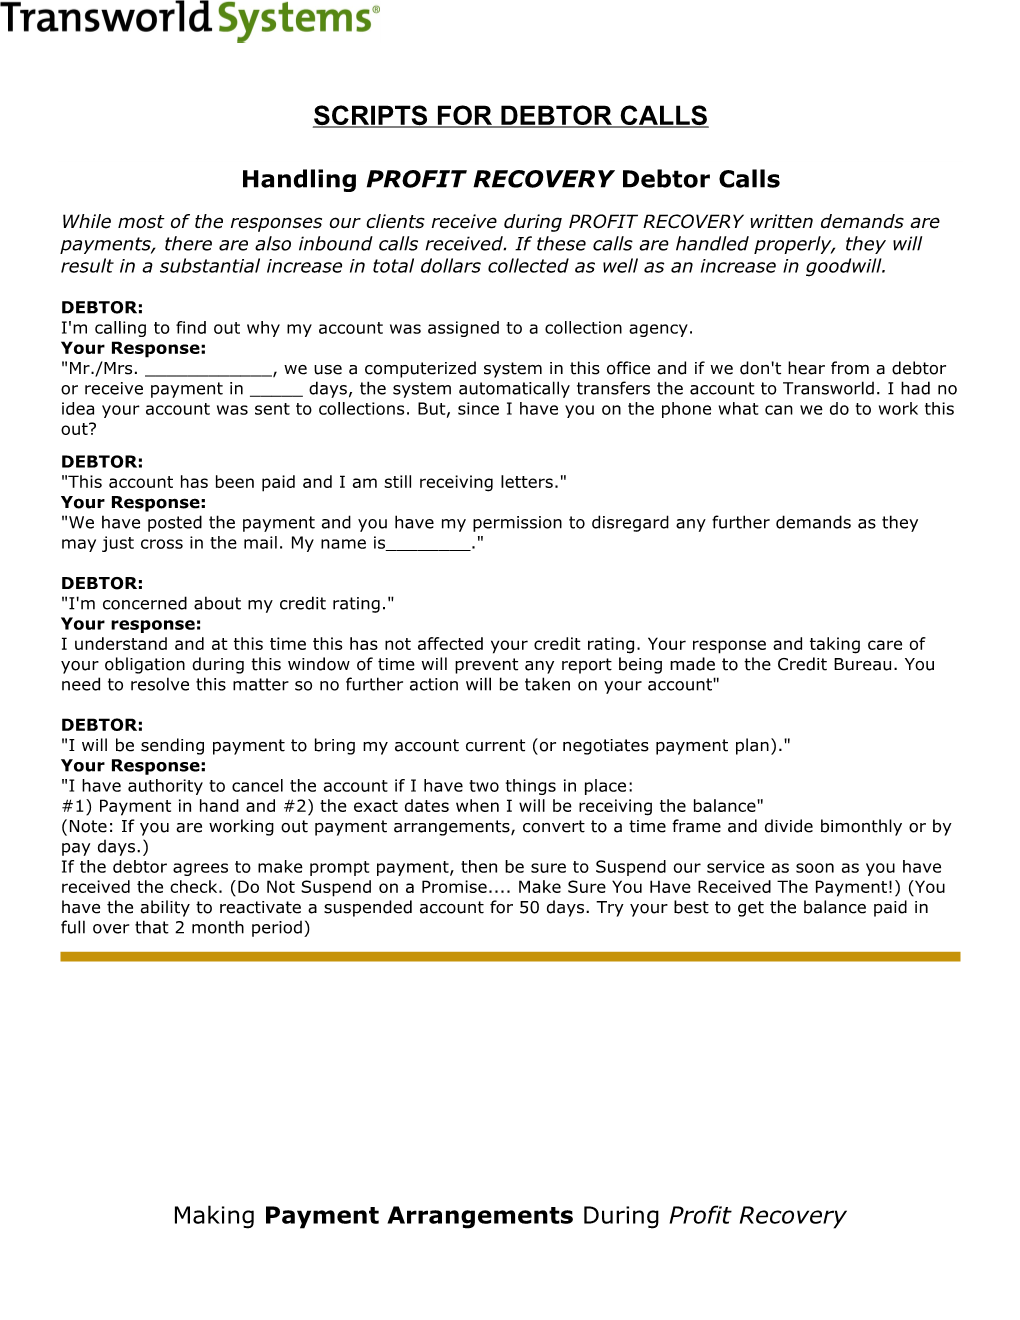 Script for Receiving Debtor Calls